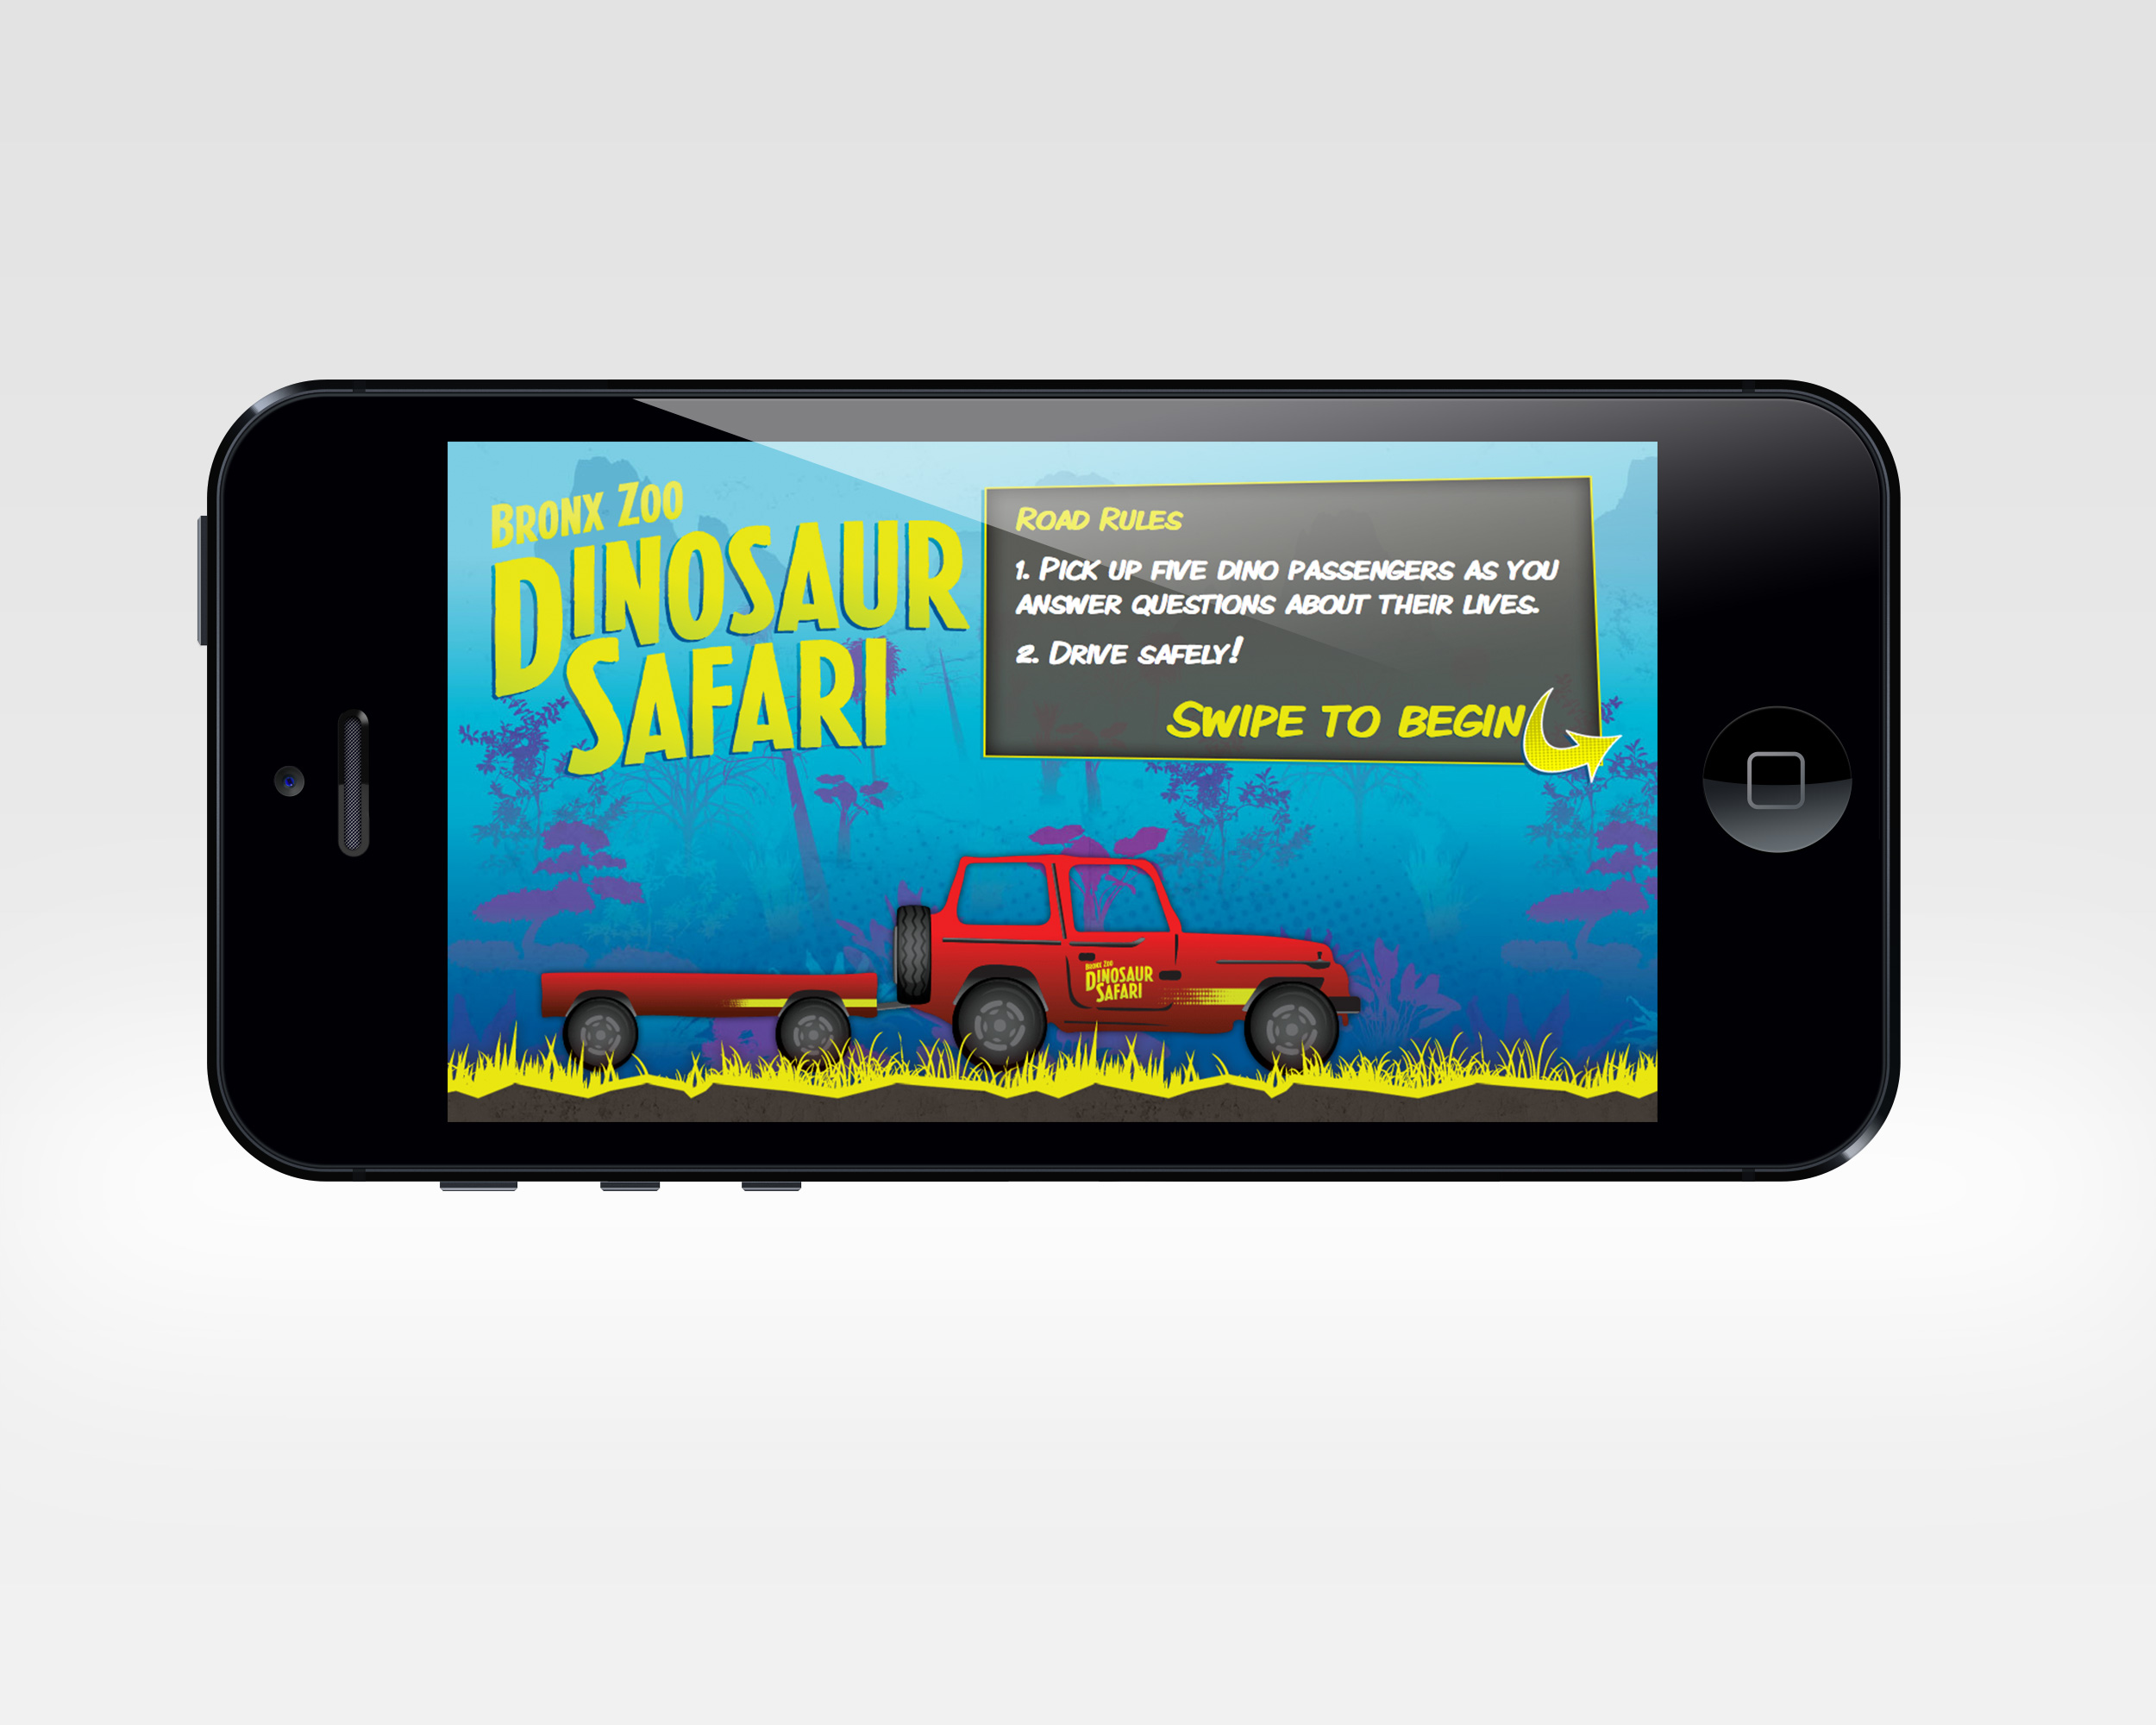   dinomobile   design, ux, development   Mobile quiz in support of the Bronx Zoo's Dinosaur Safari experience.   View Project     